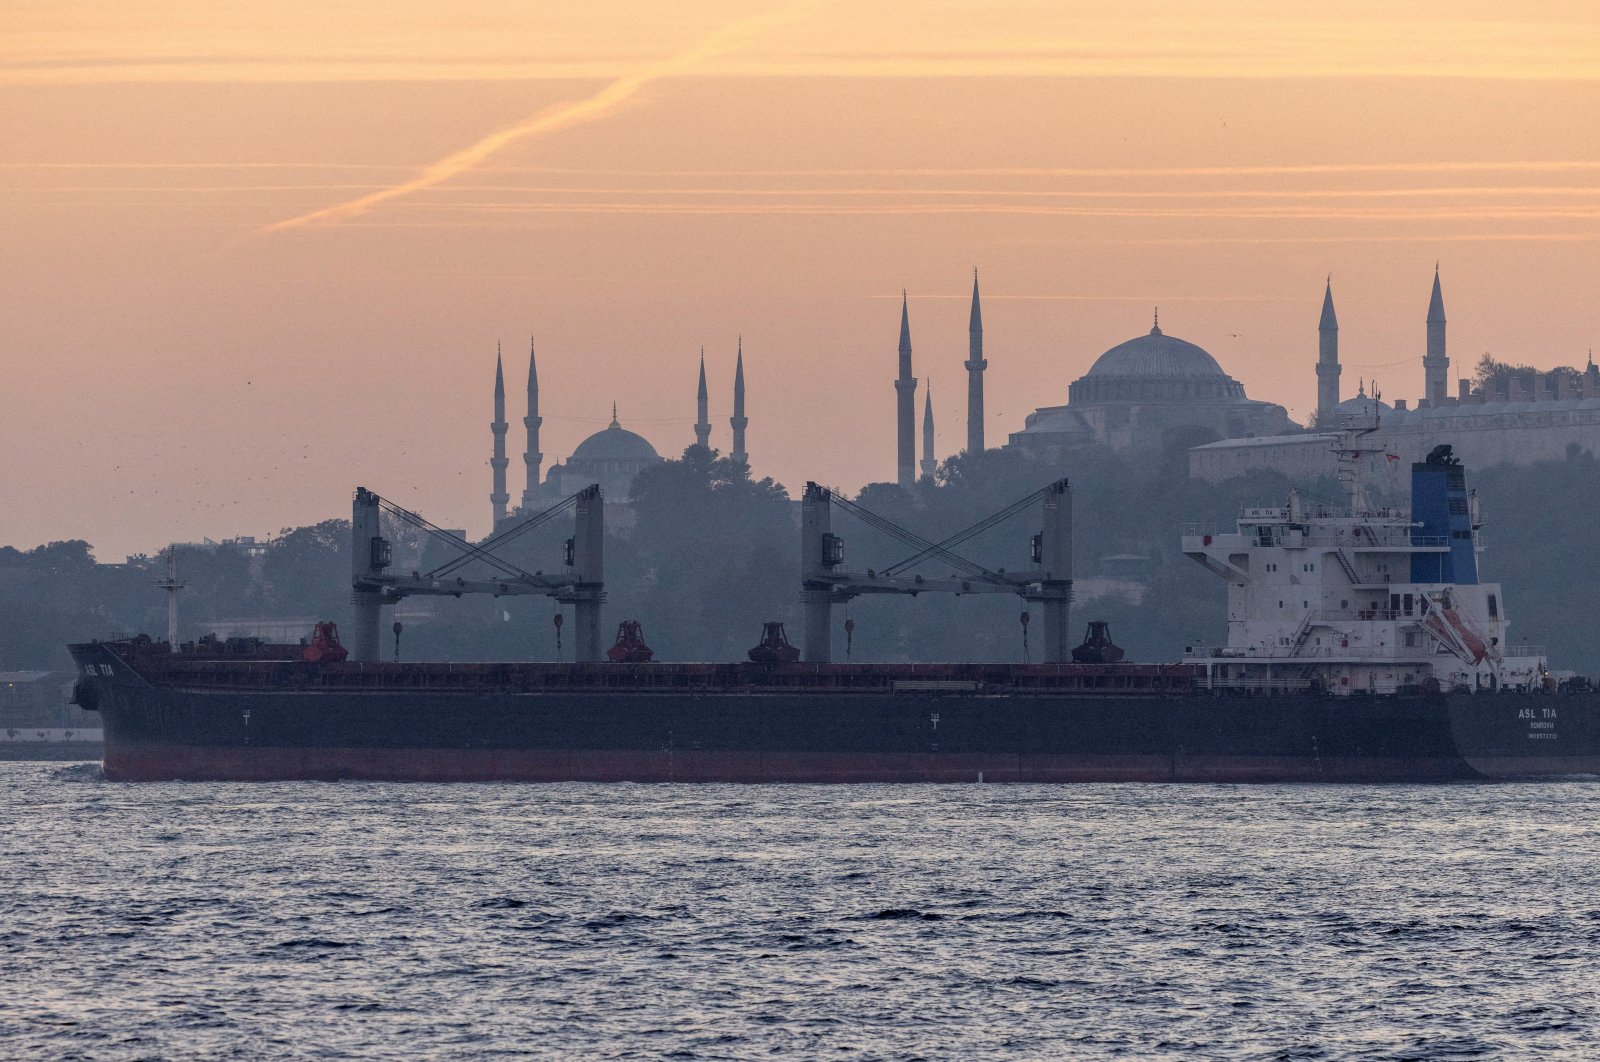 Asl Tia, a cargo vessel carrying Ukrainian grain, transits Bosporus, in Istanbul, Türkiye, Nov. 2, 2022. (Reuters File Photo)